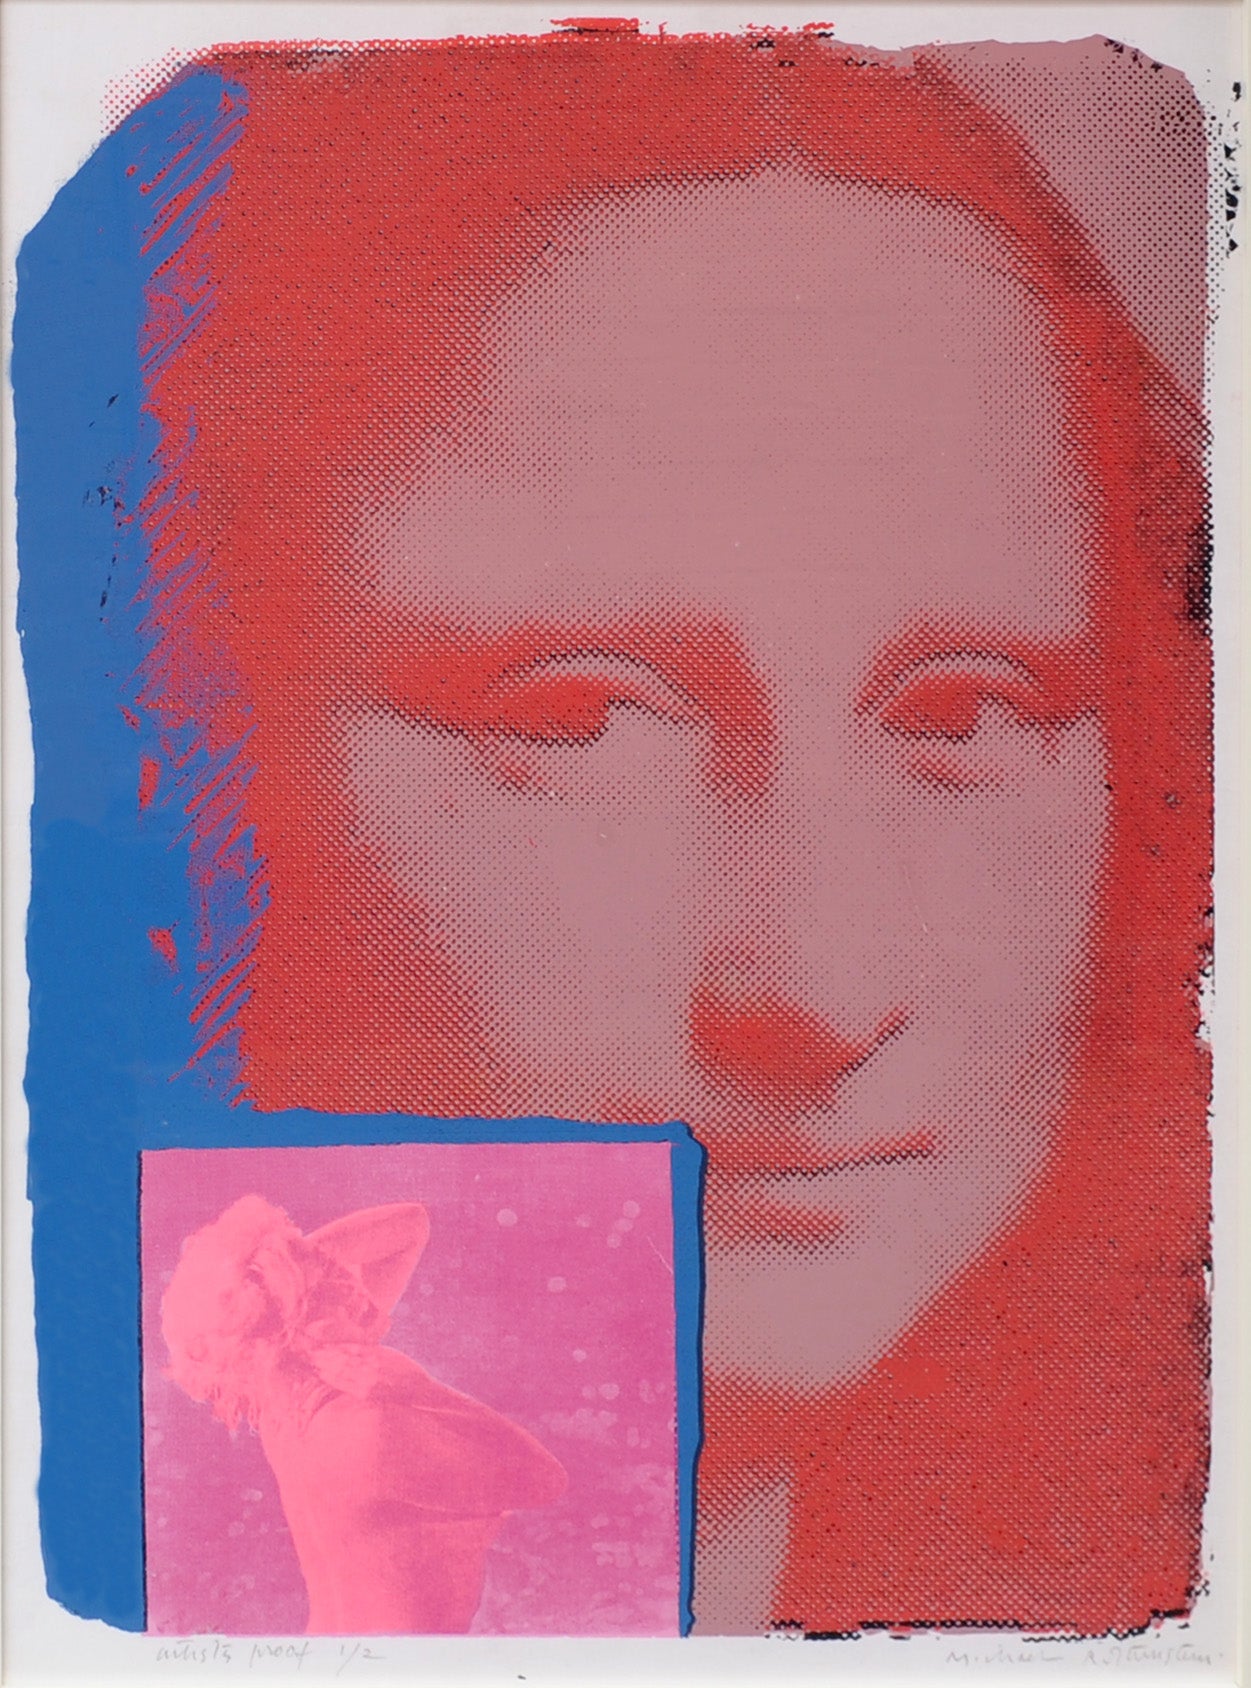 Michael Rothenstein, Mona Monroe, 1969/70, linocut 